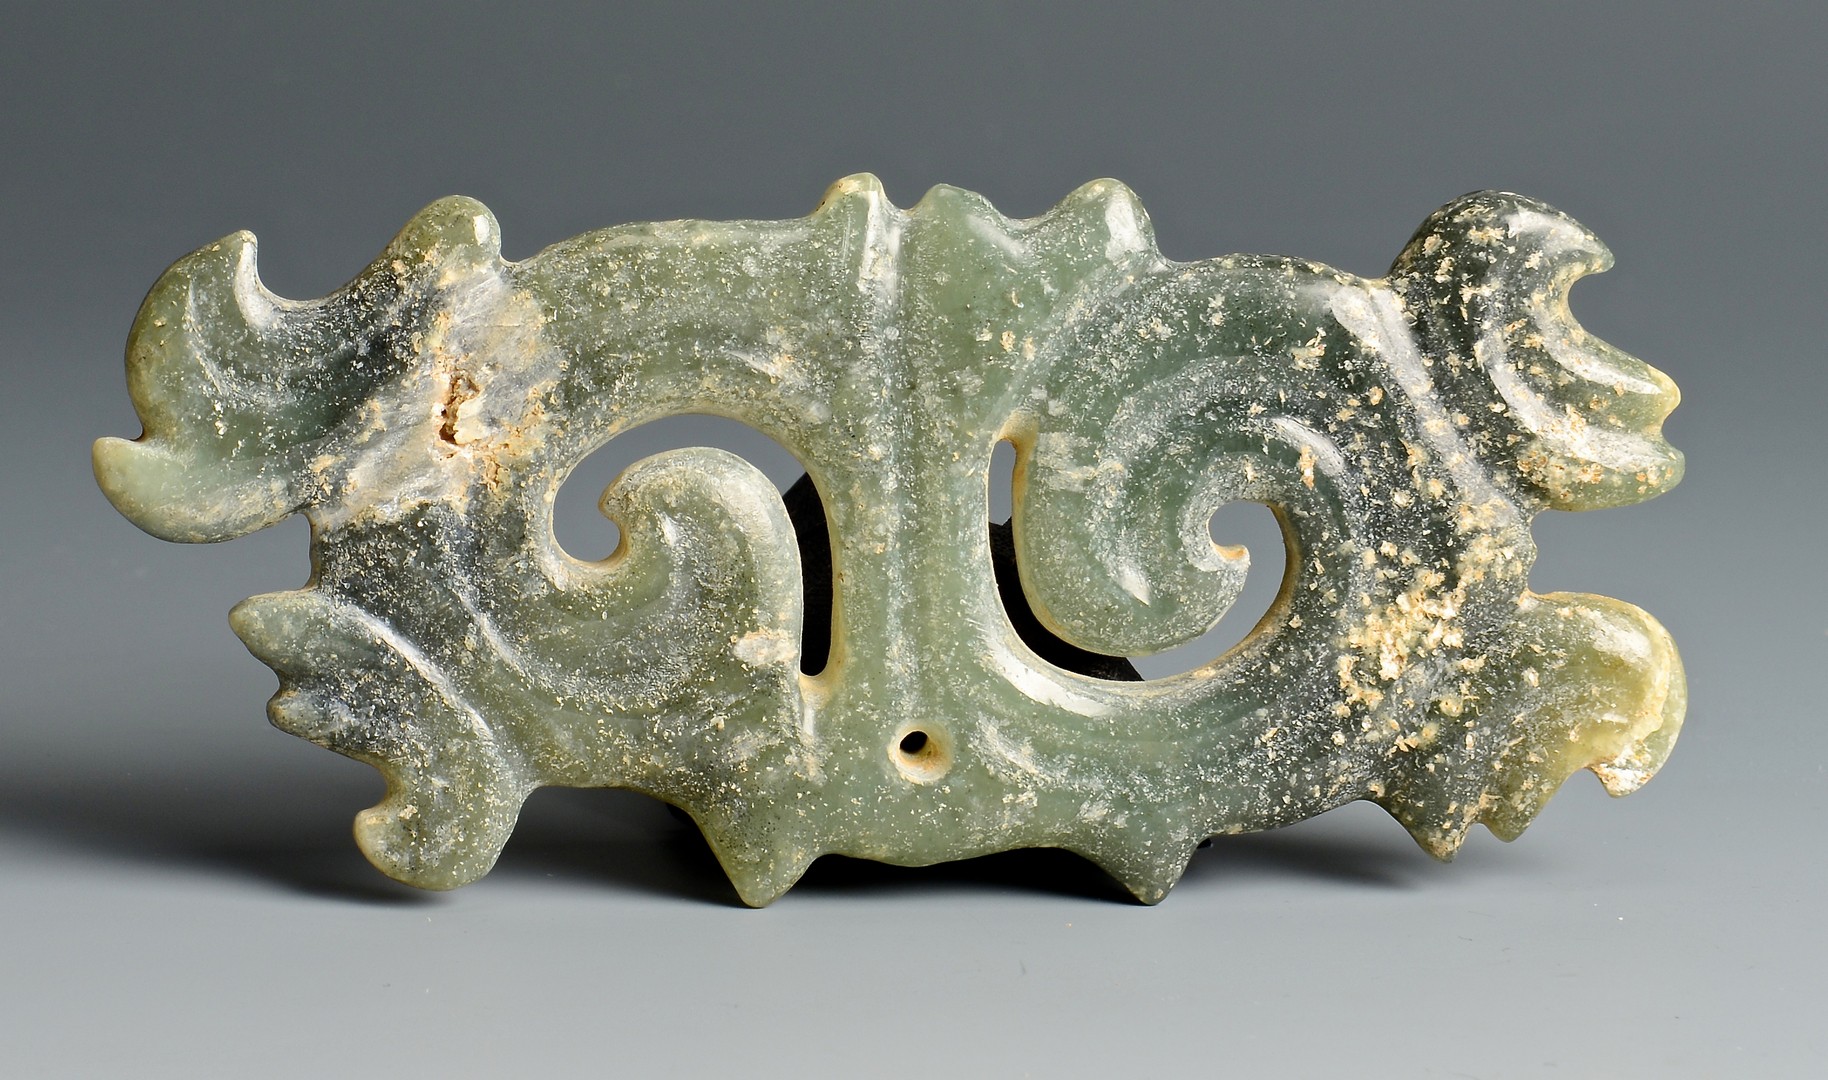 Lot 706: 3 Carved Jade pendants